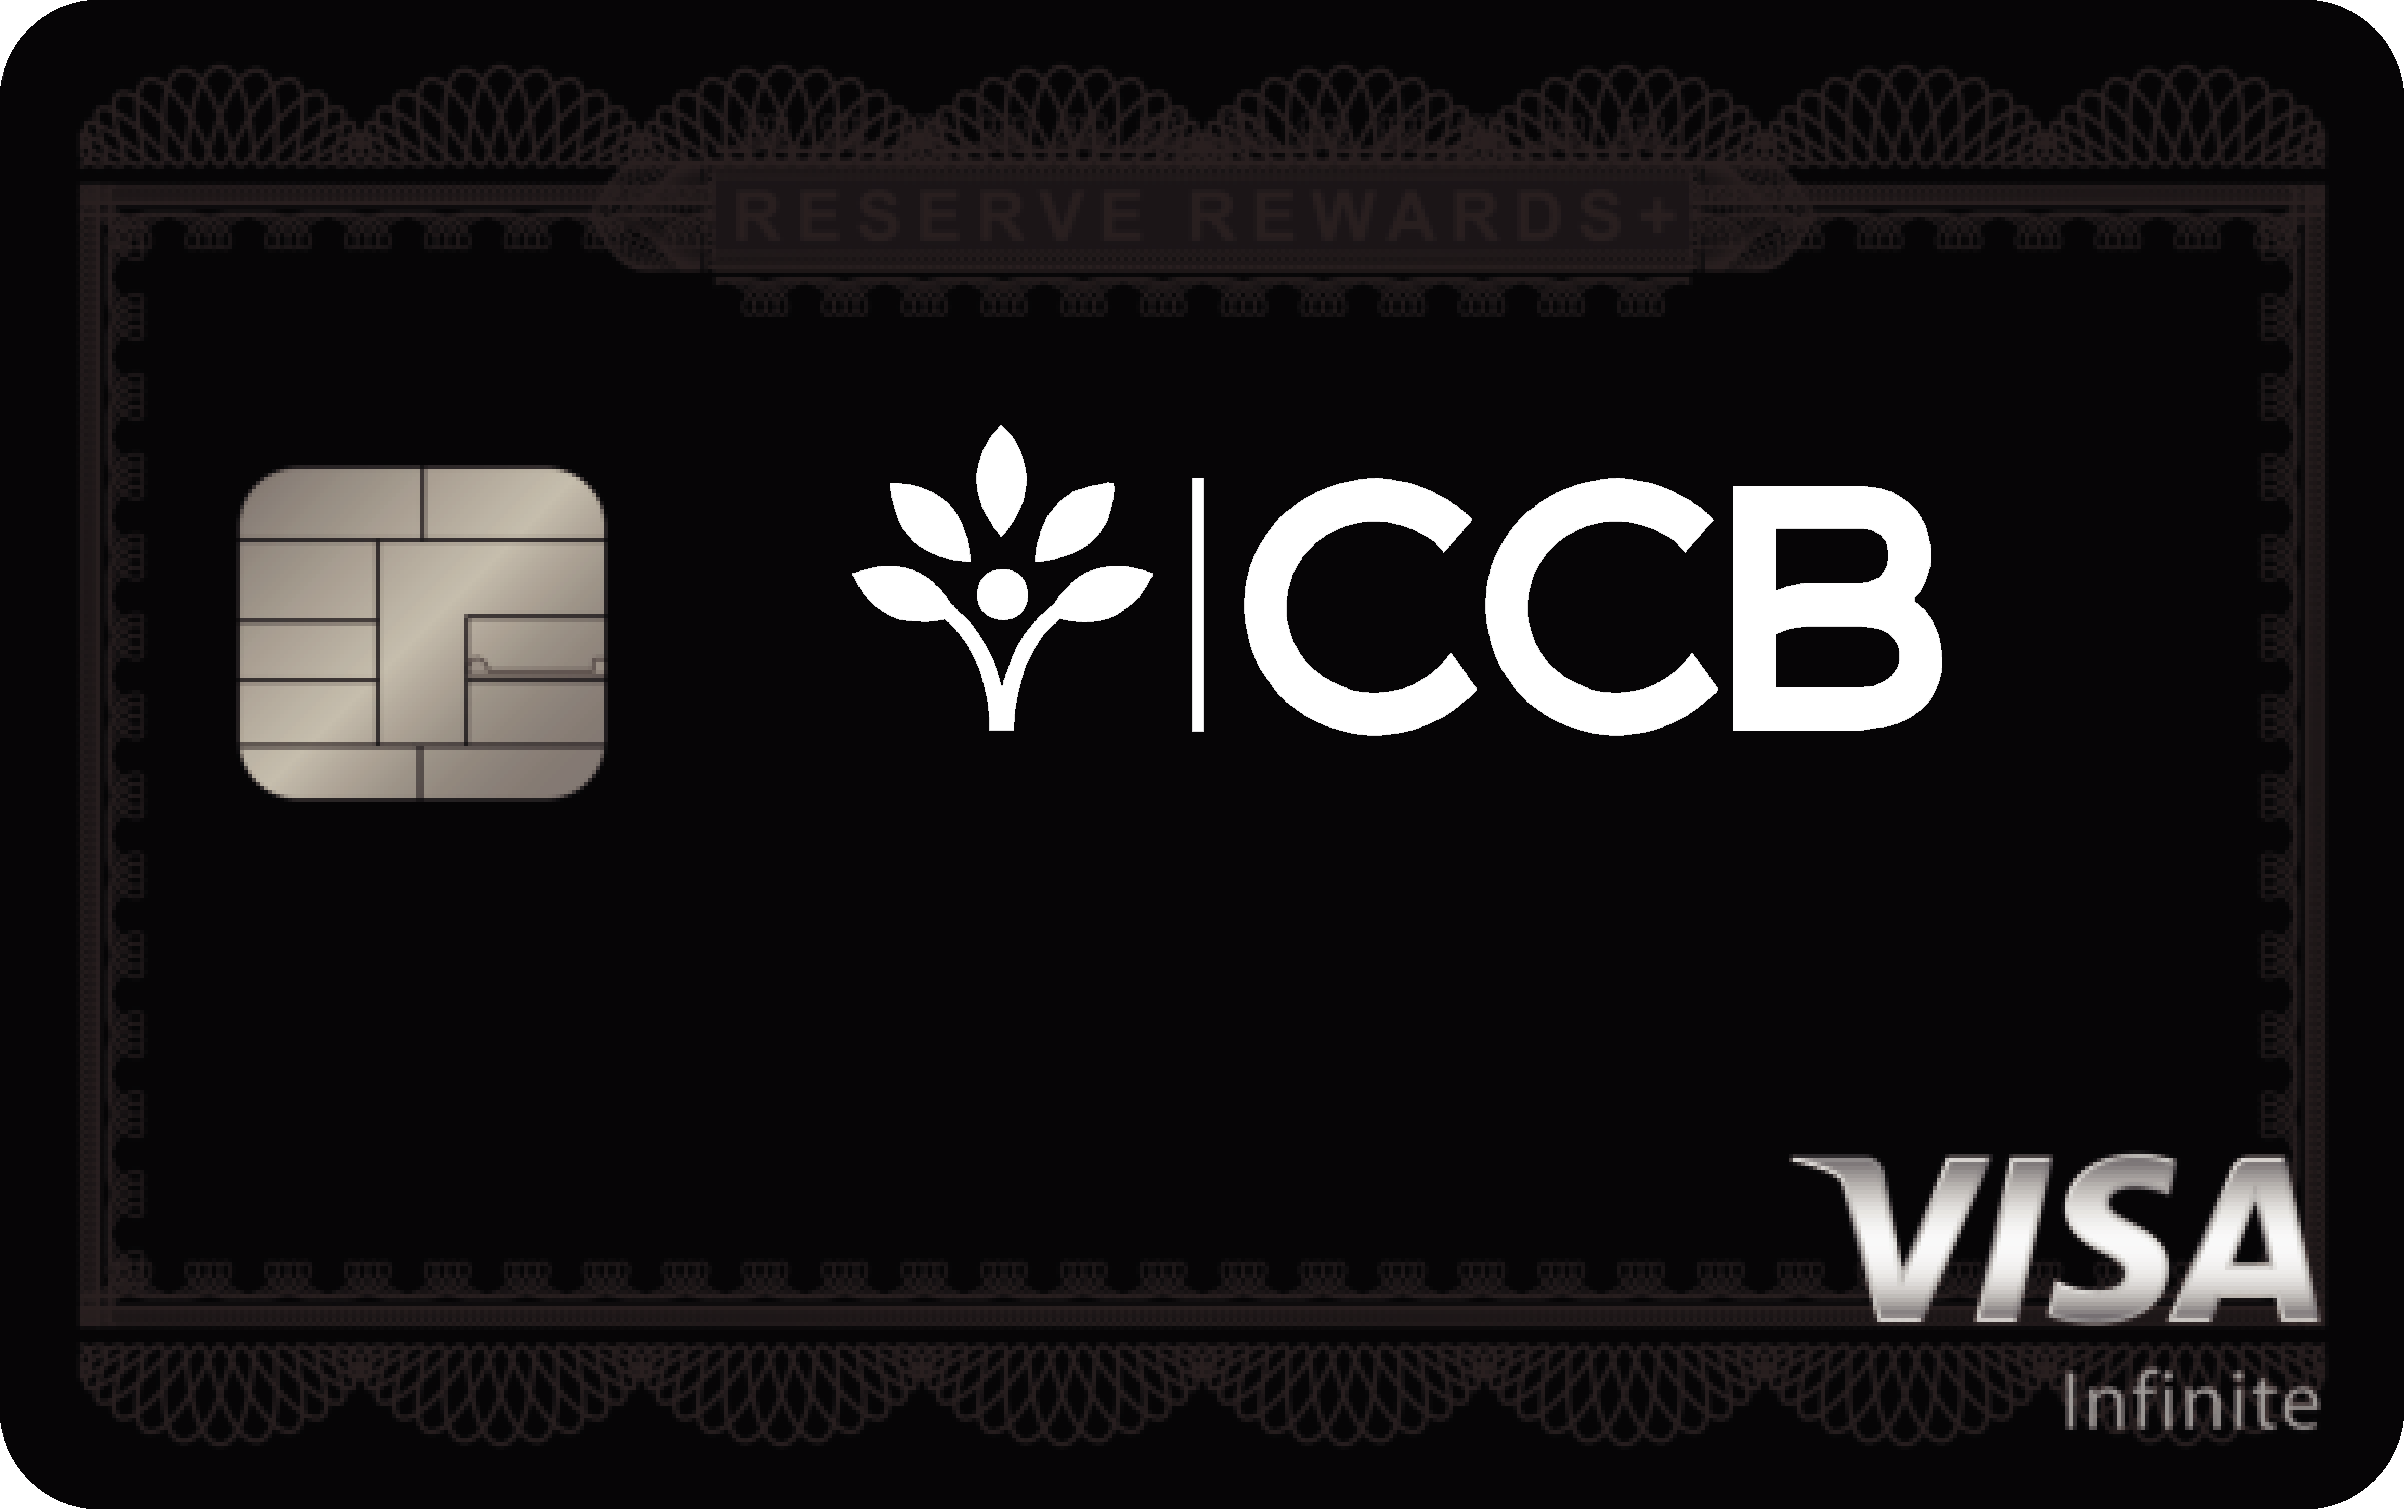 Cattaraugus County Bank Reserve Rewards+ Card